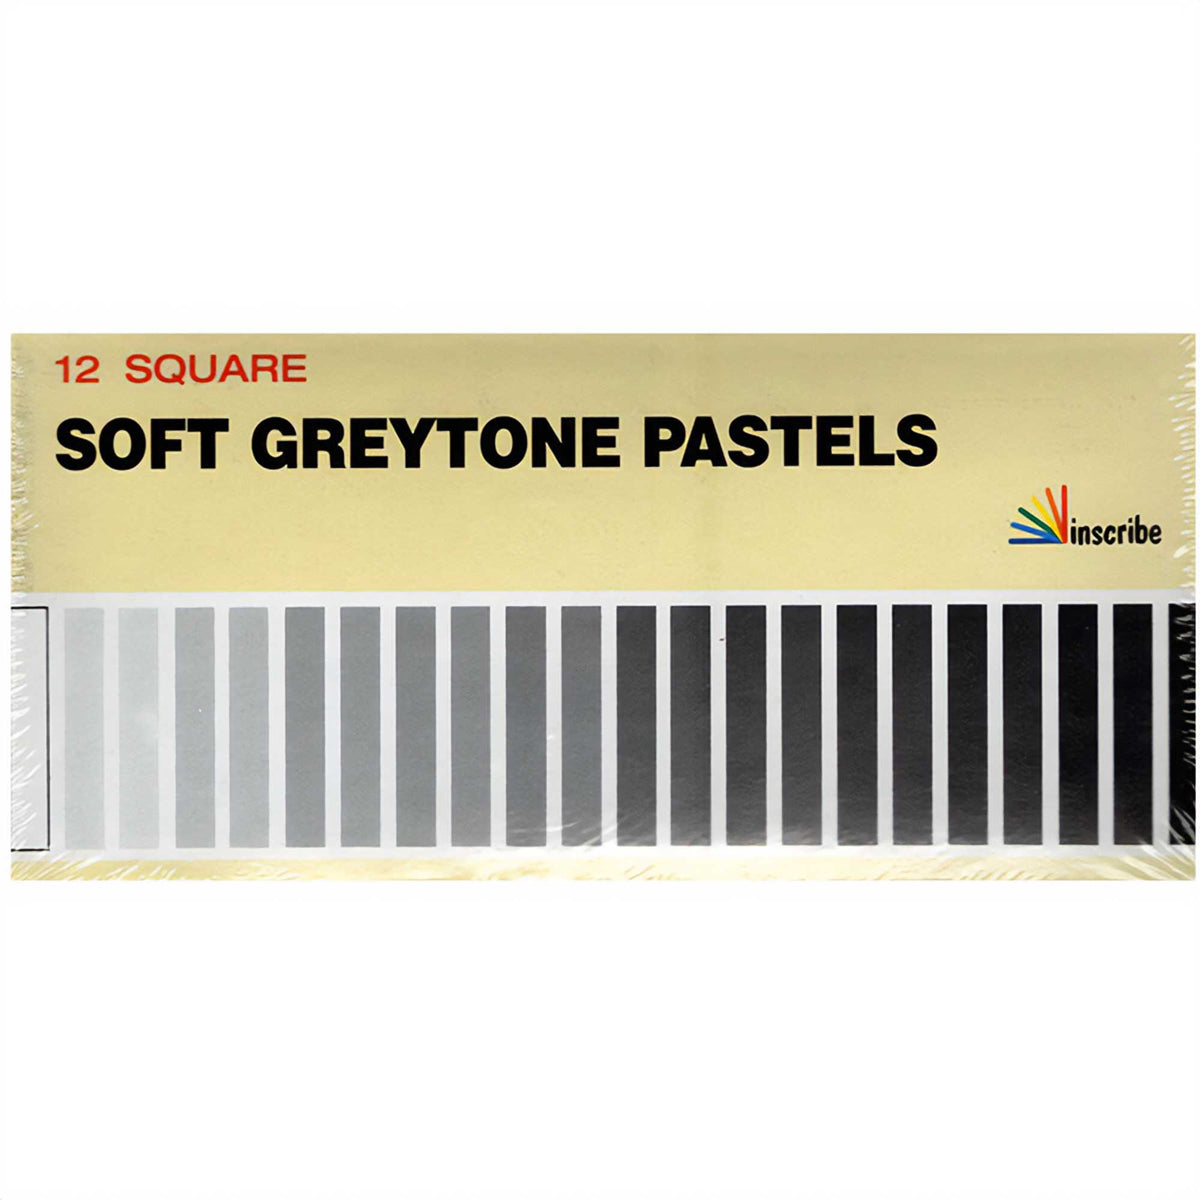 Inscribe Soft Greytone Pastels